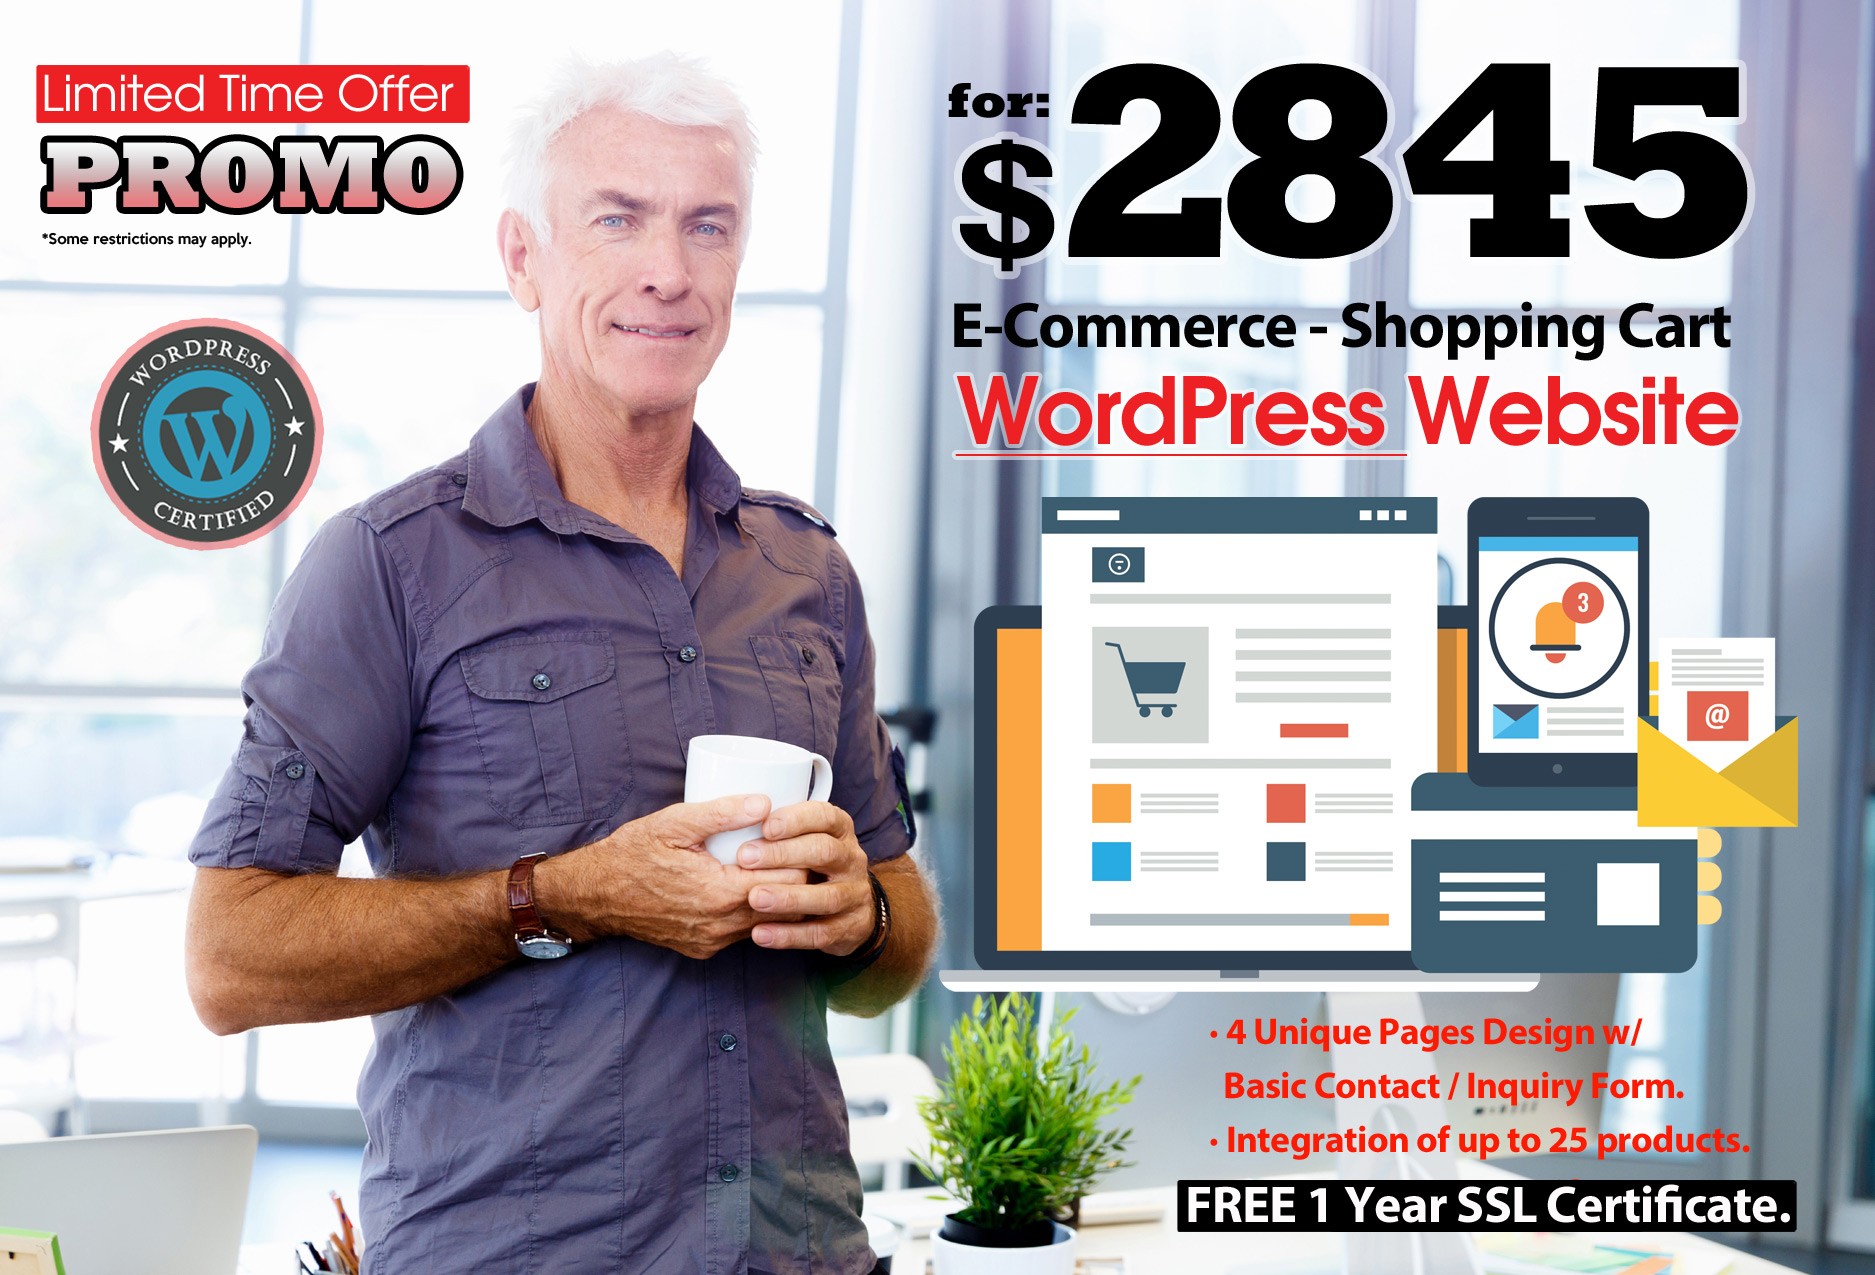 QuintAdvertising-Promo-Website-WordPress-Ecommerce-2895